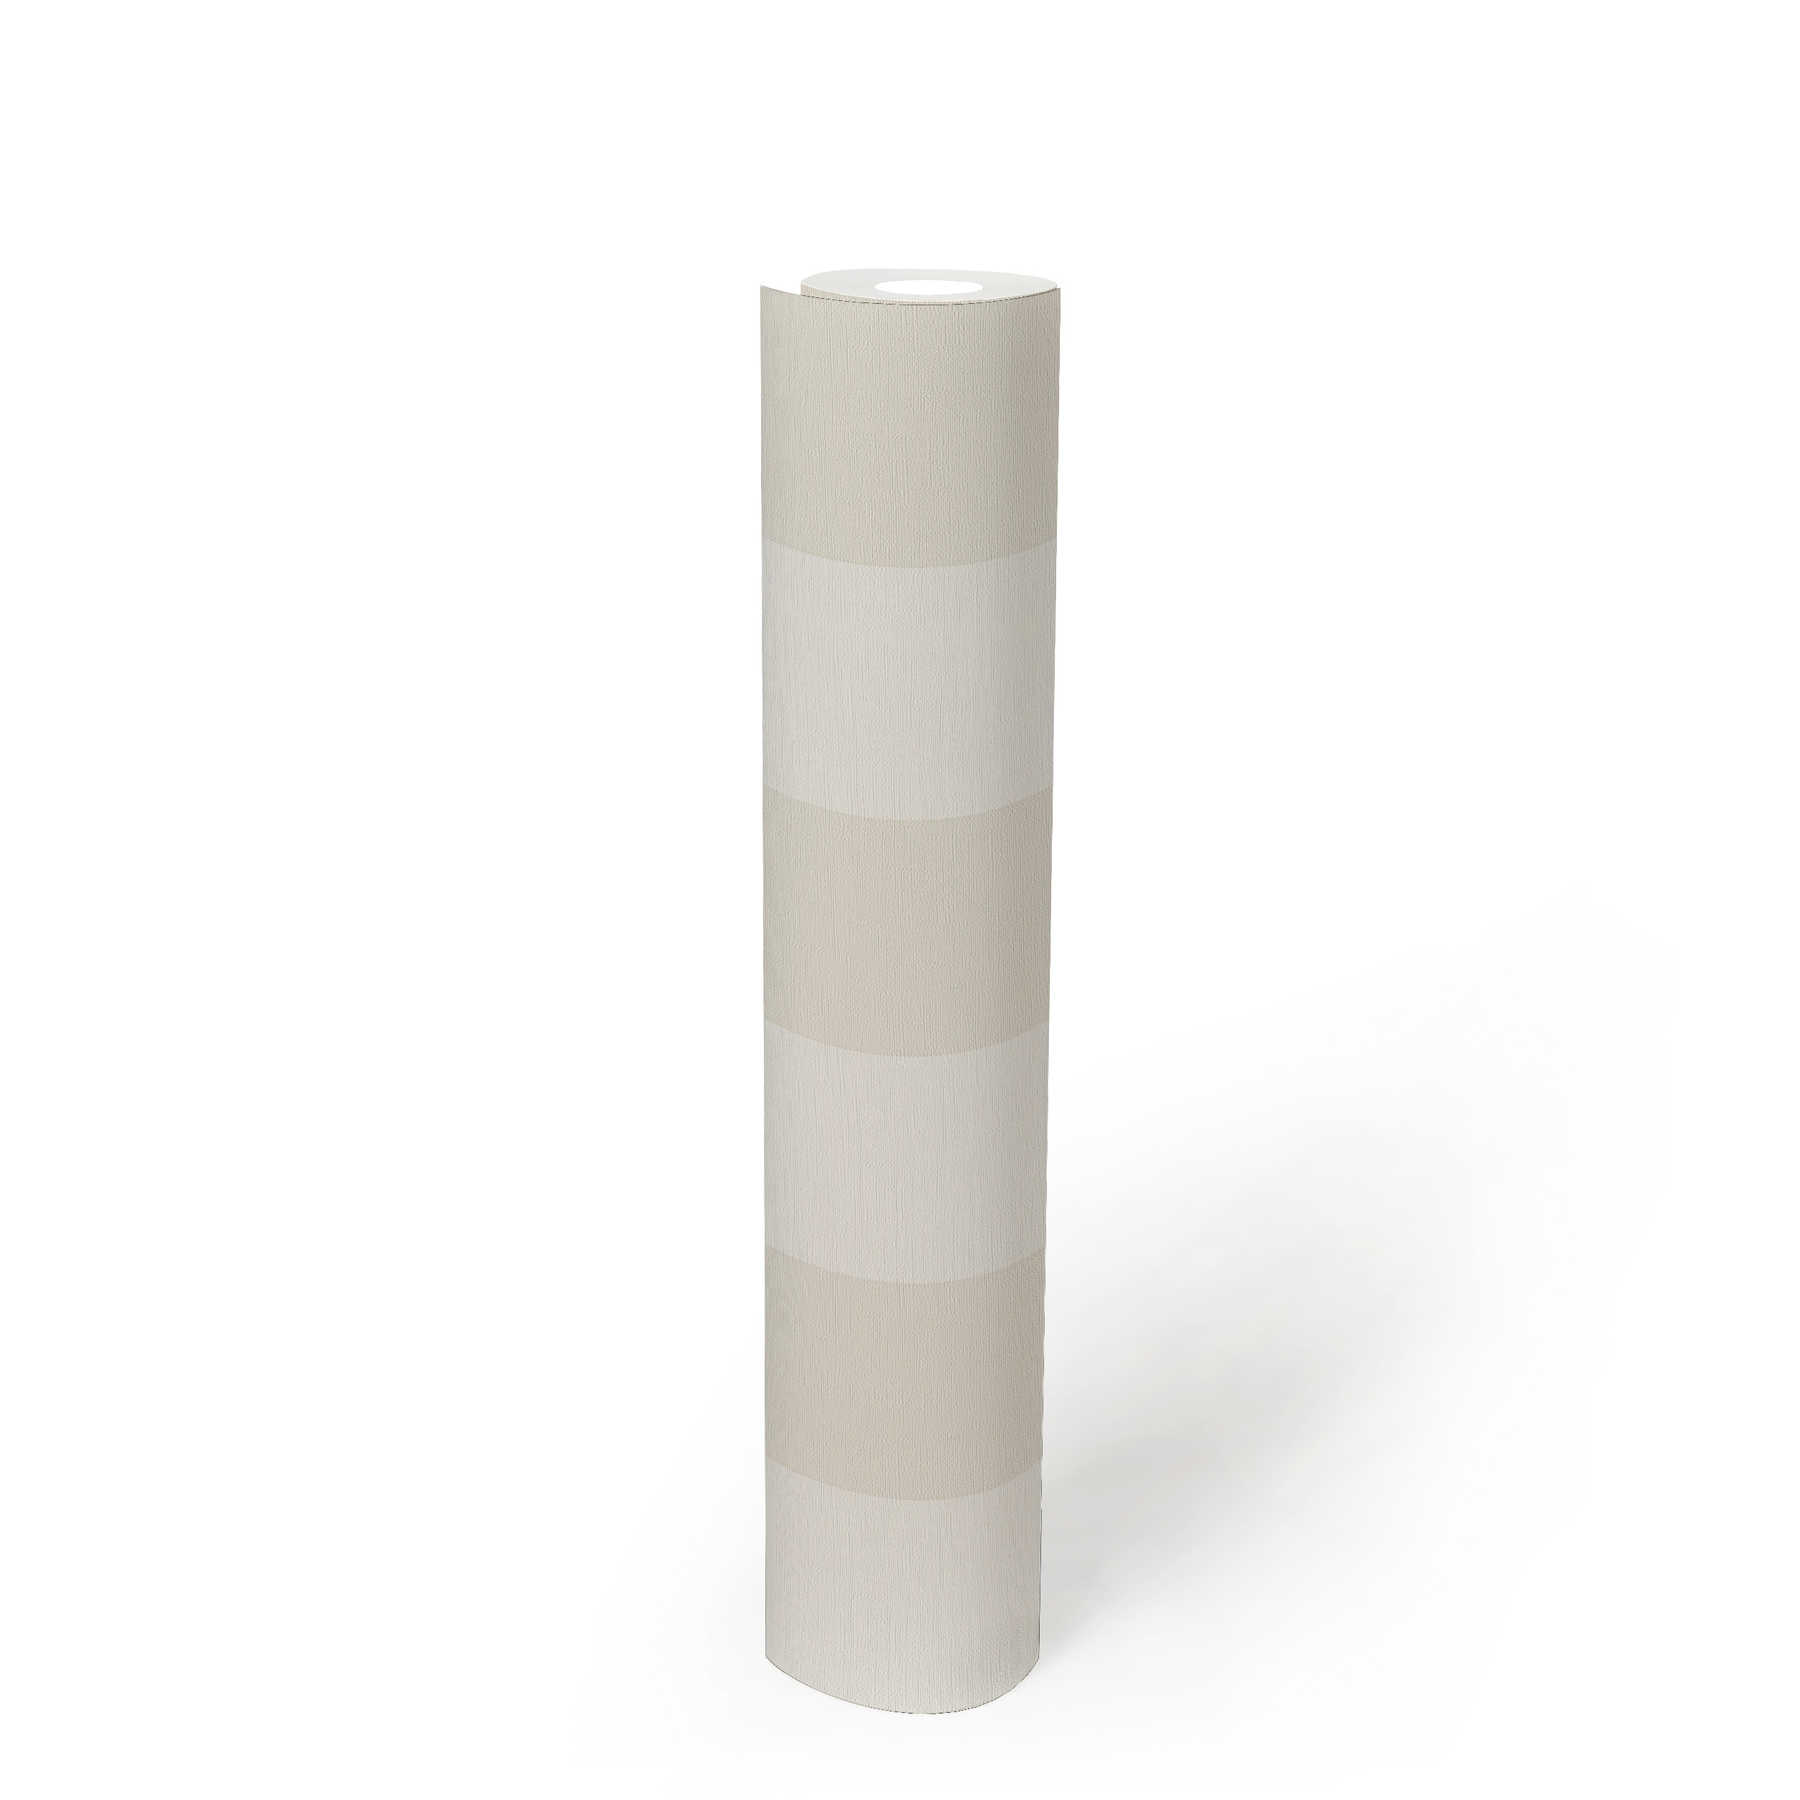             Papel pintado de rayas en bloque con aspecto textil para un diseño joven - beige, blanco
        